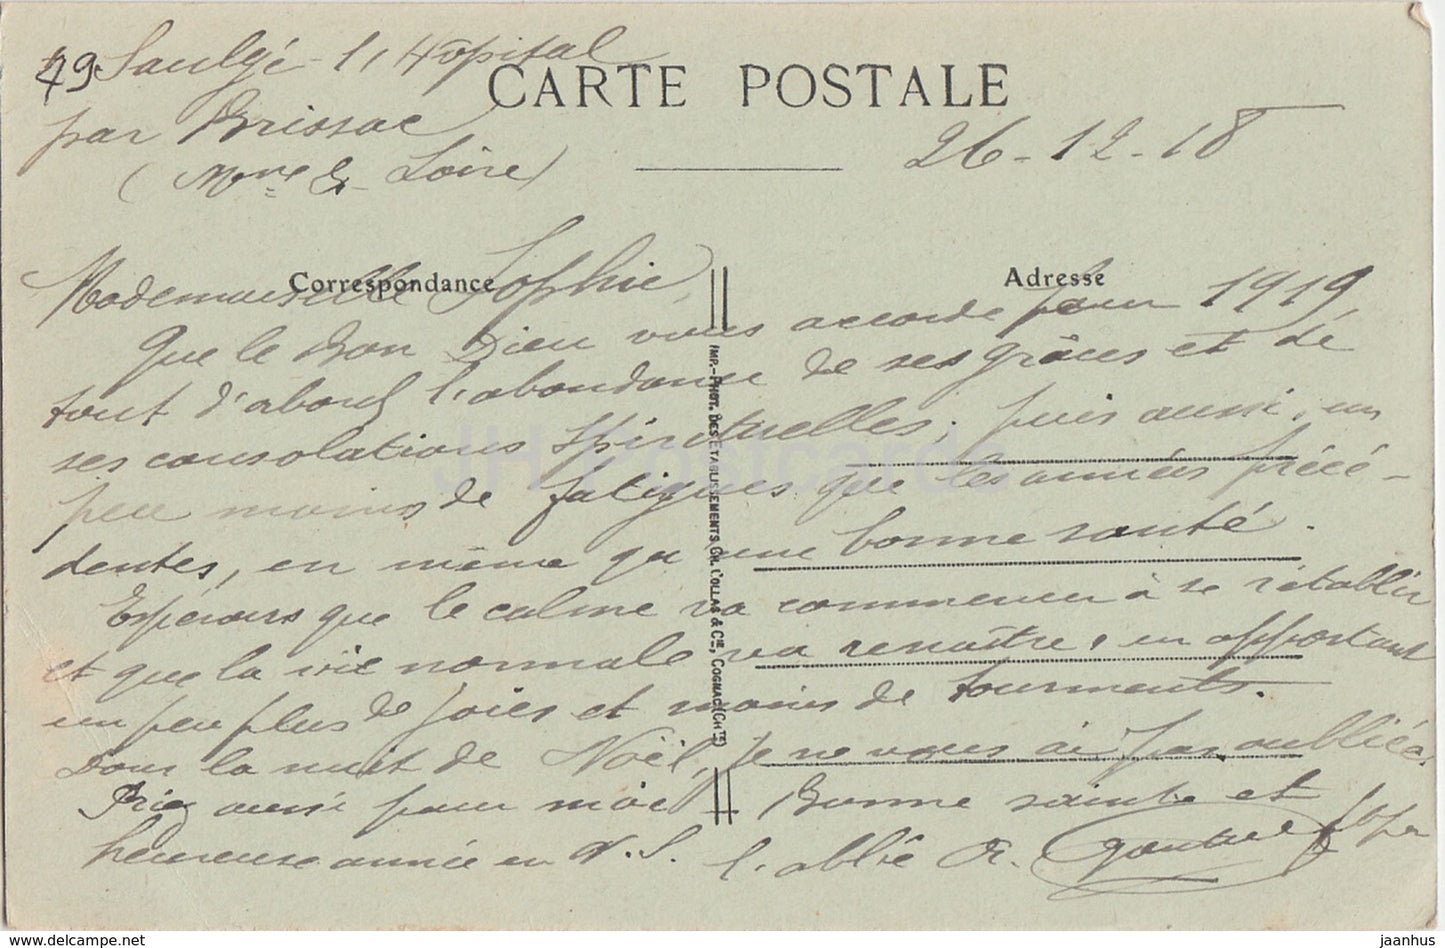 Saulge - Le Chateau - Schloss - 1918 - alte Postkarte - Frankreich - gebraucht